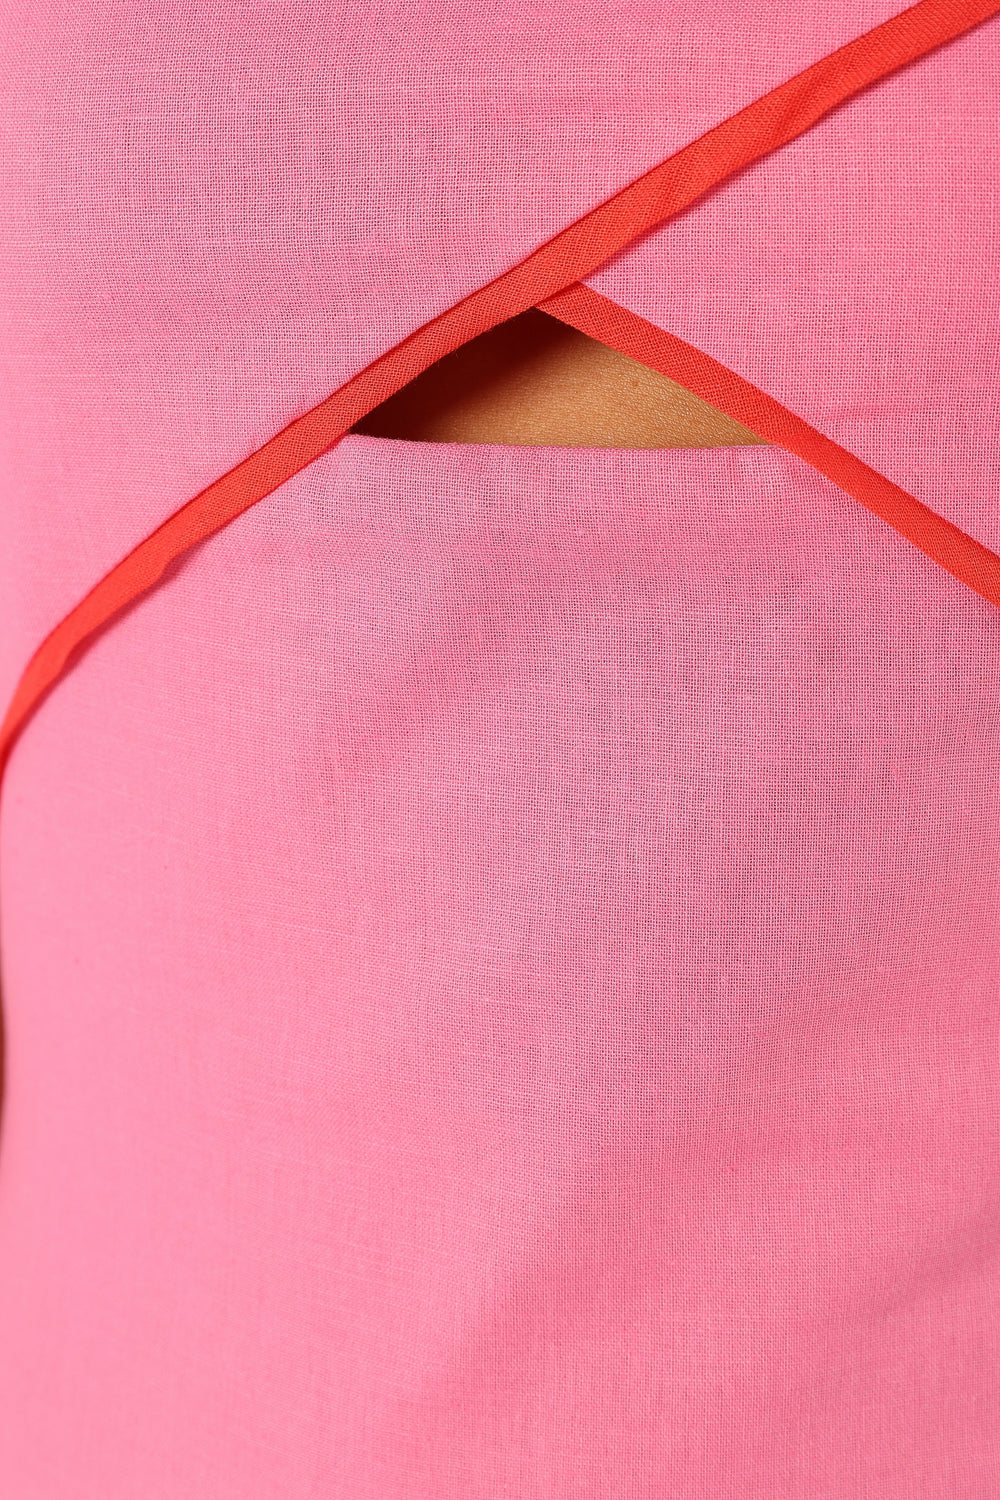 Petal and Pup USA DRESSES Callie Contrast Trim Maxi Dress - Pink